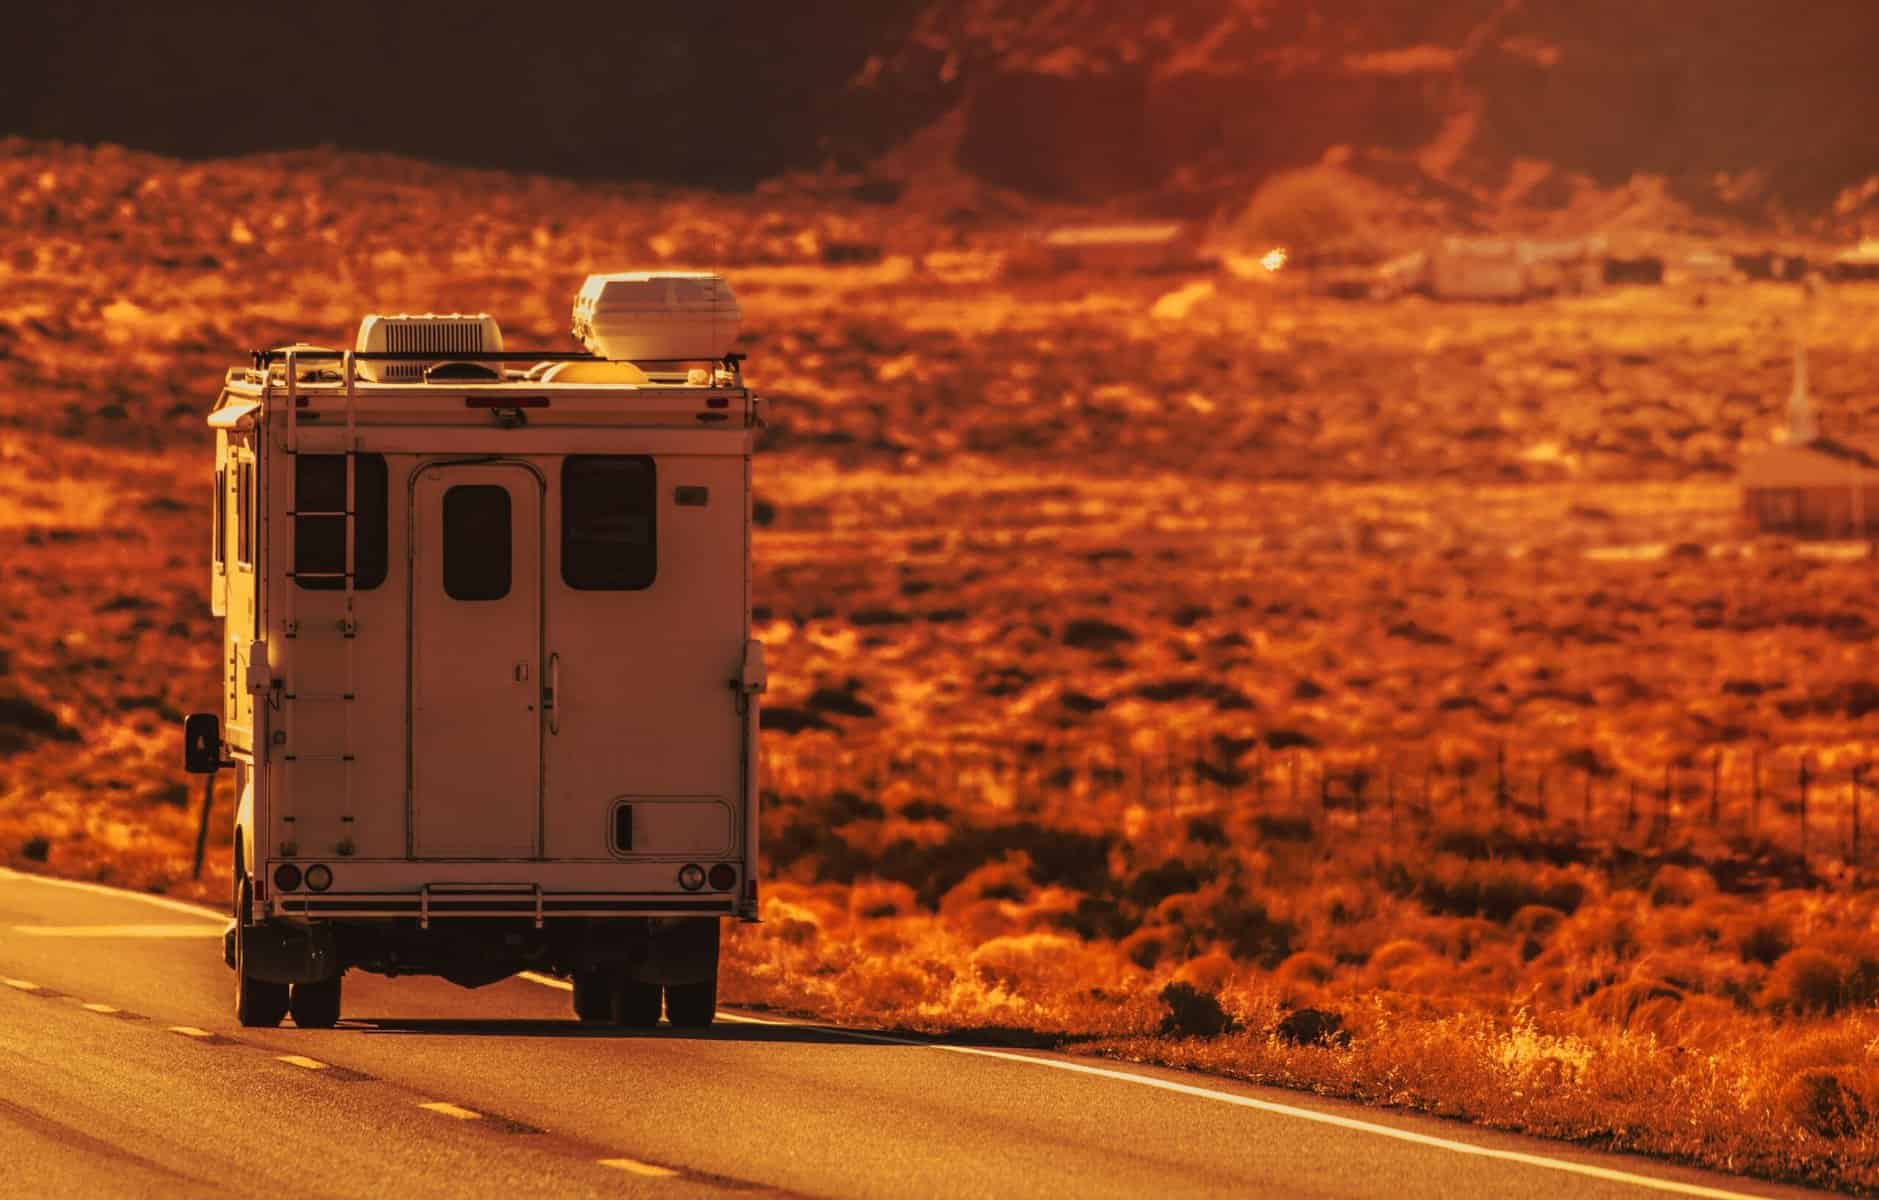 truck camper offroad desert camping (Image: Shutterstock)